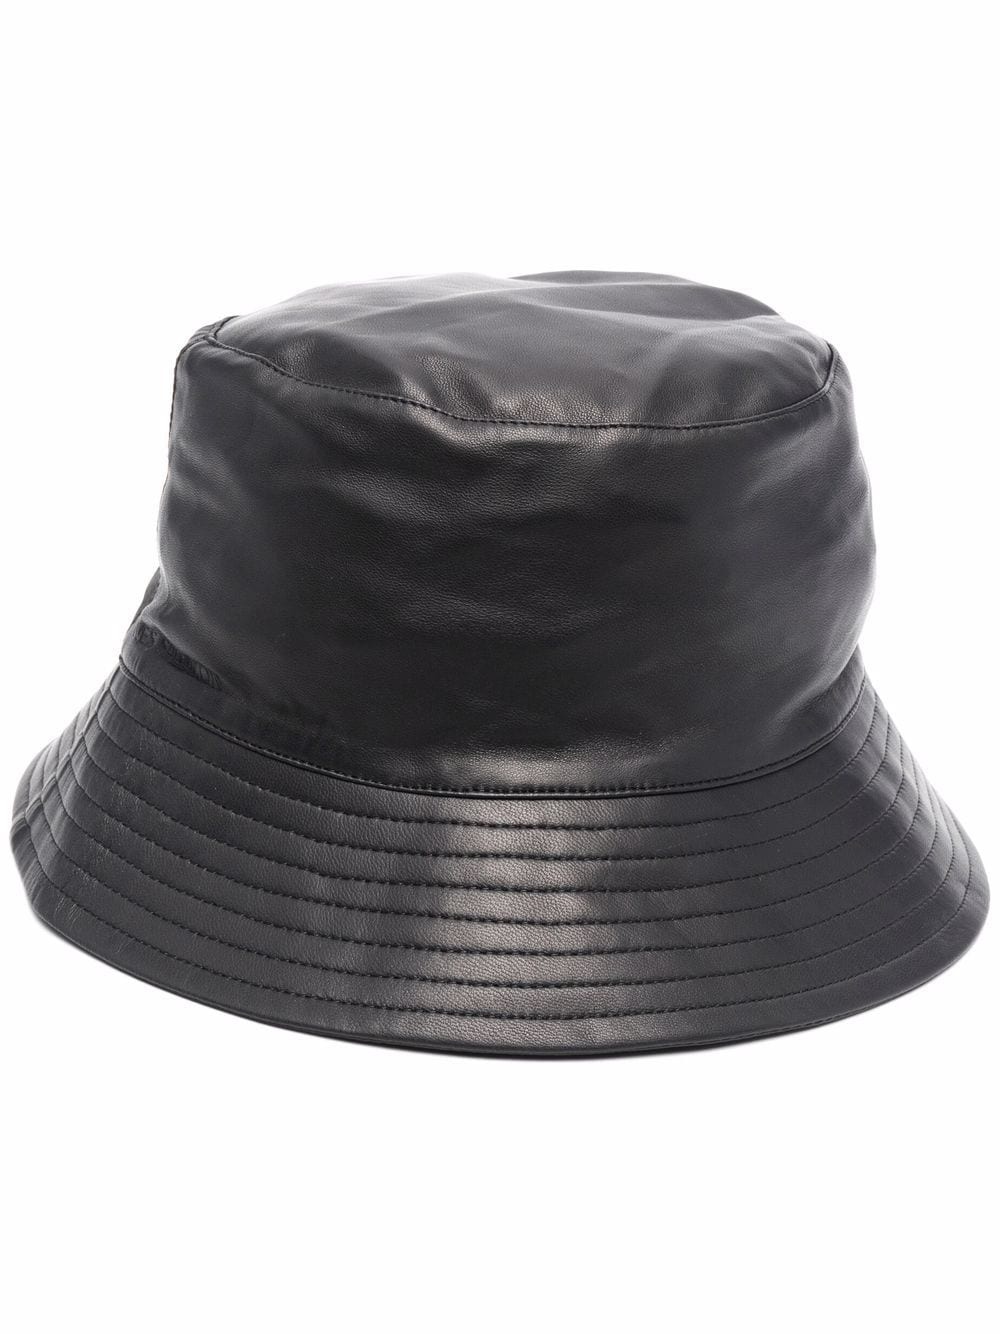 Yves Salomon leather bucket hat